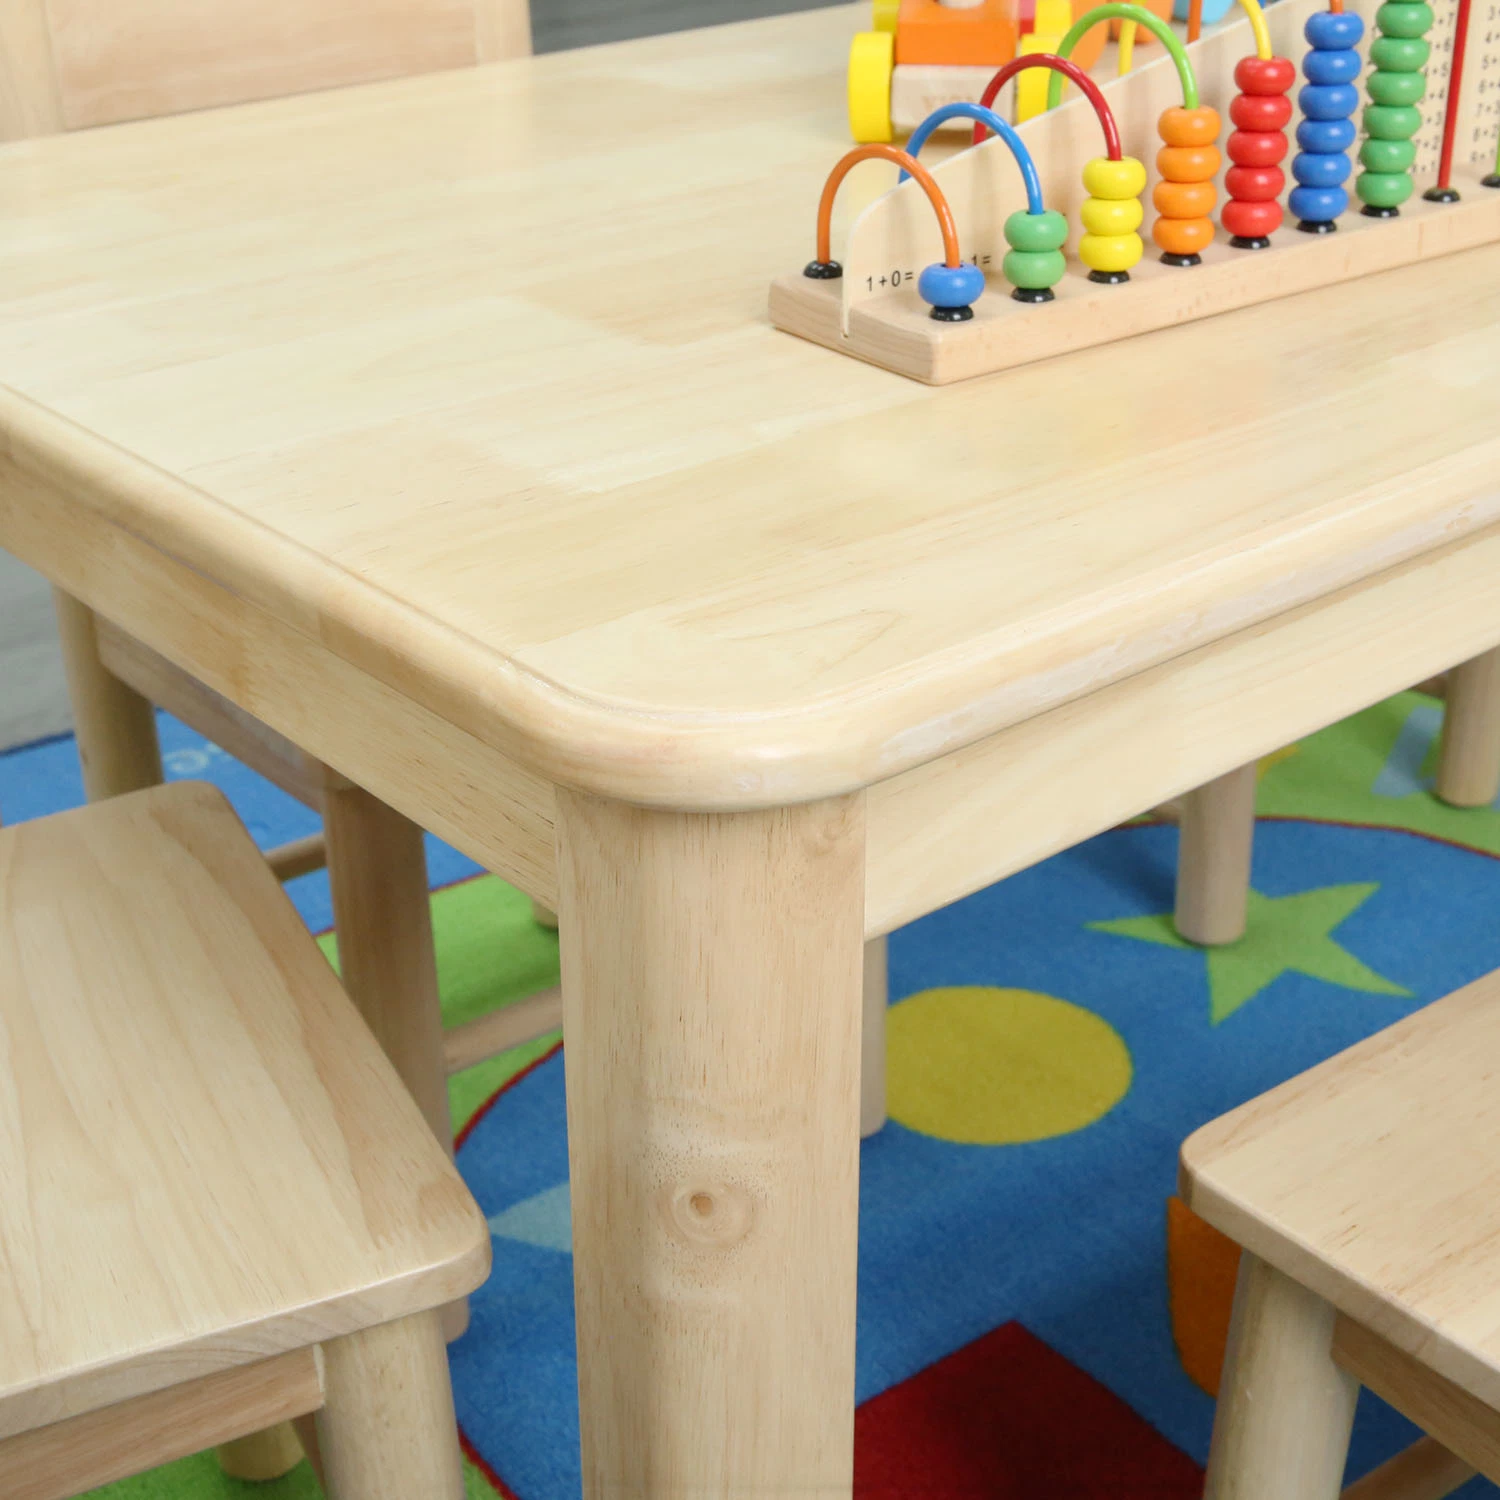 Preschool and Kindergarten Daycare and Nursery Furniture, Kids Furniture, Children and Baby Furniture